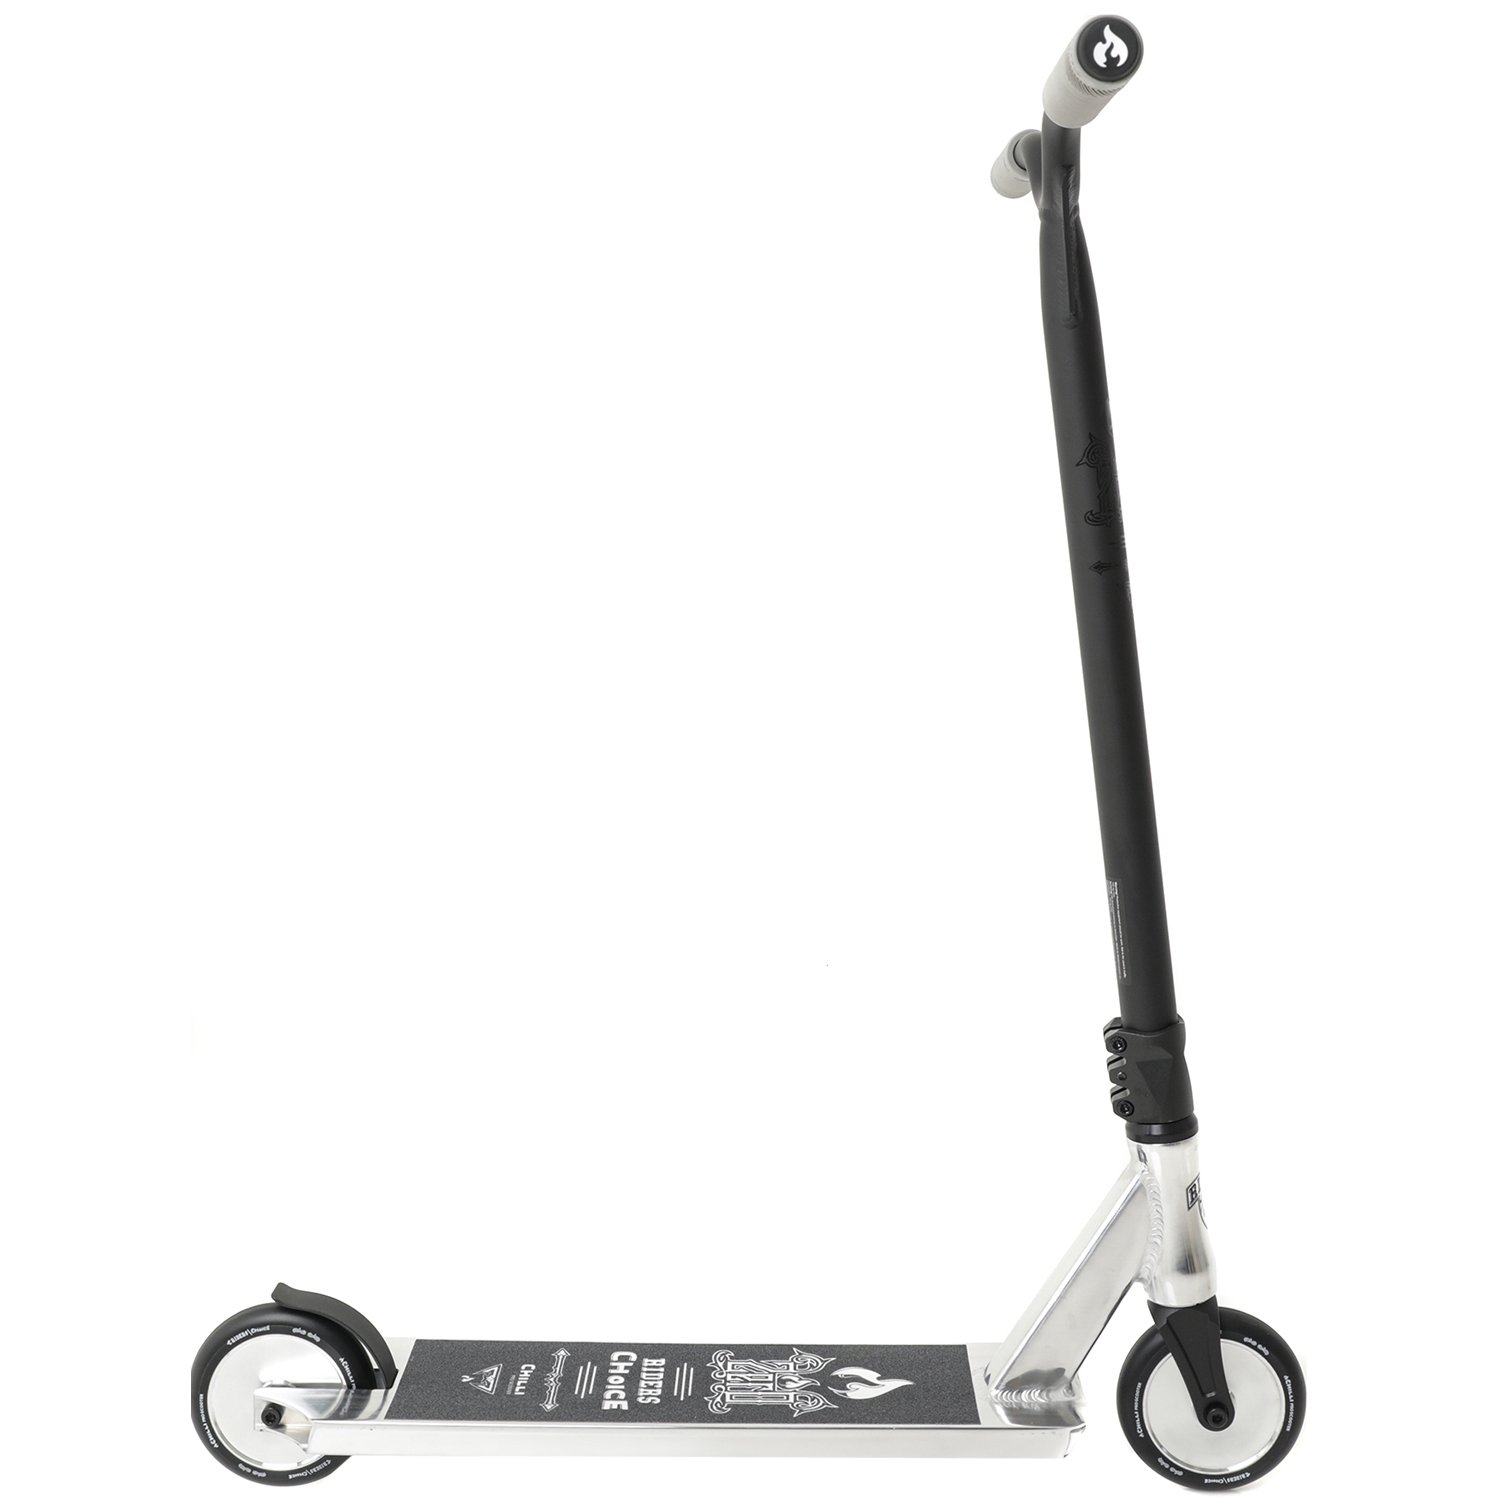 Самокат Chilli Pro Scooter Zero Polished, взрослый, трюковый, 2021, серый, 114-5 трюковый самокат tech team city scooter 2021